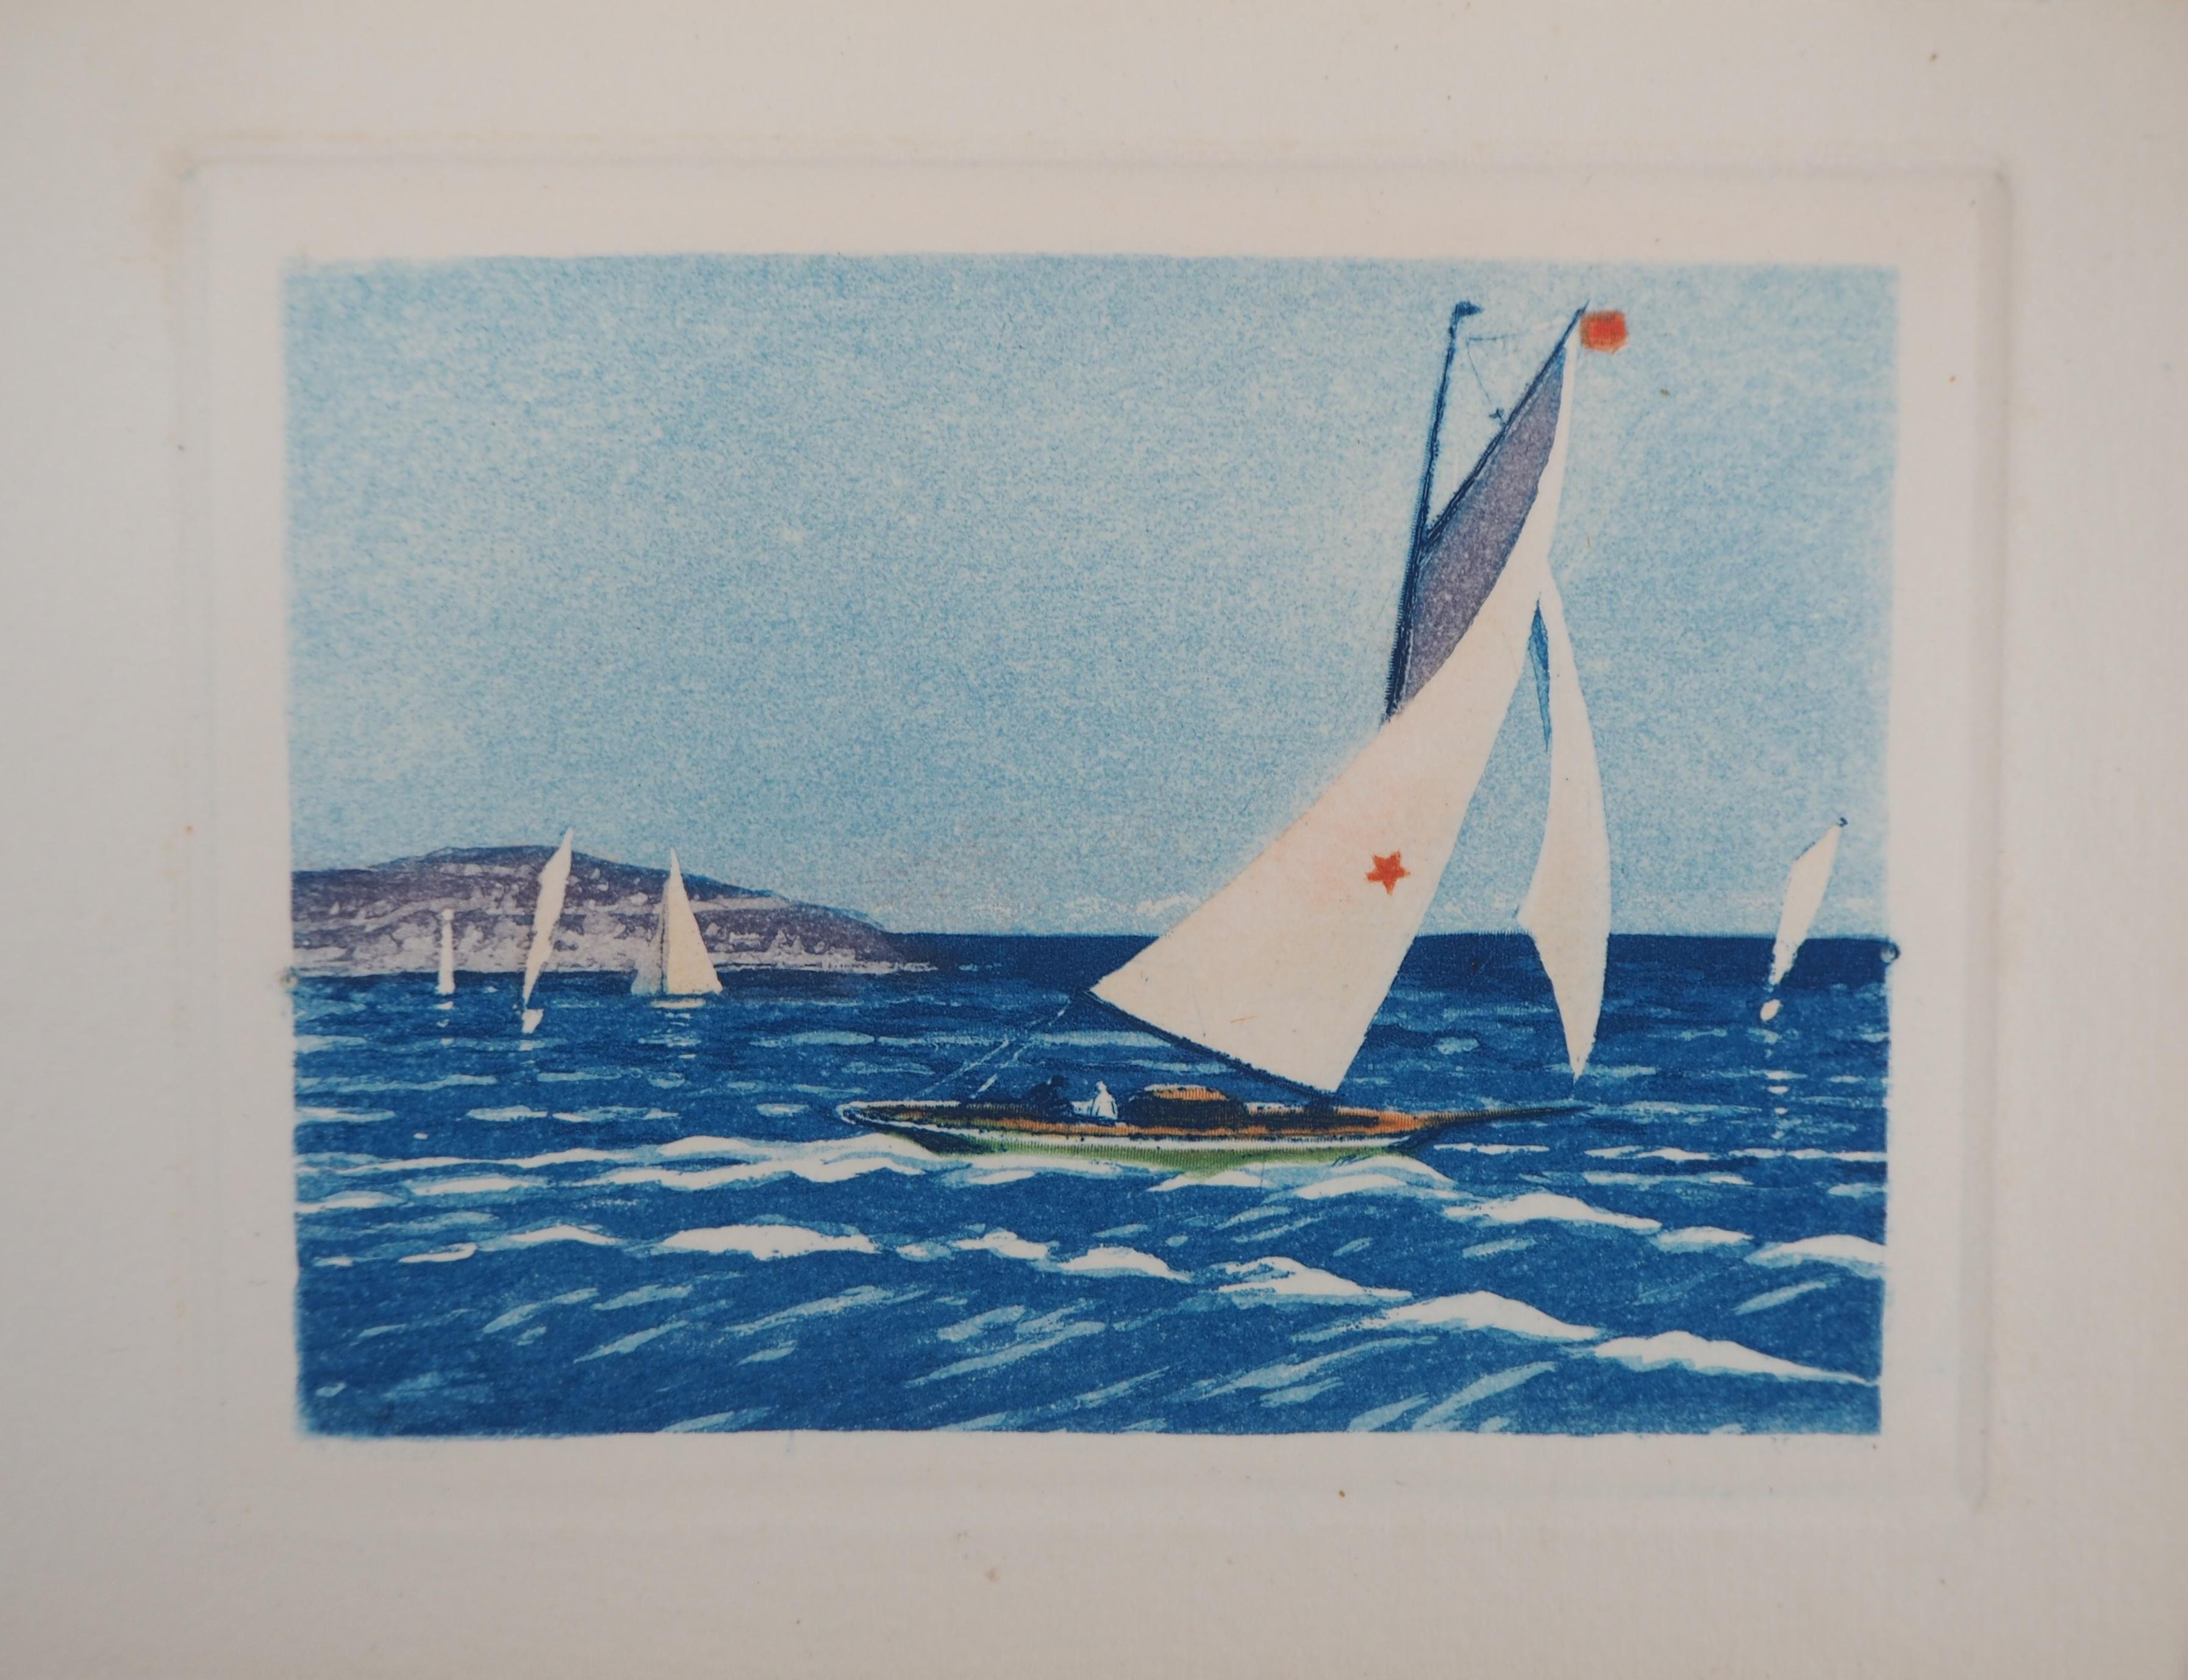 René Ligeron Landscape Print - Atlantic : Regatta of Sailboats - Original etching